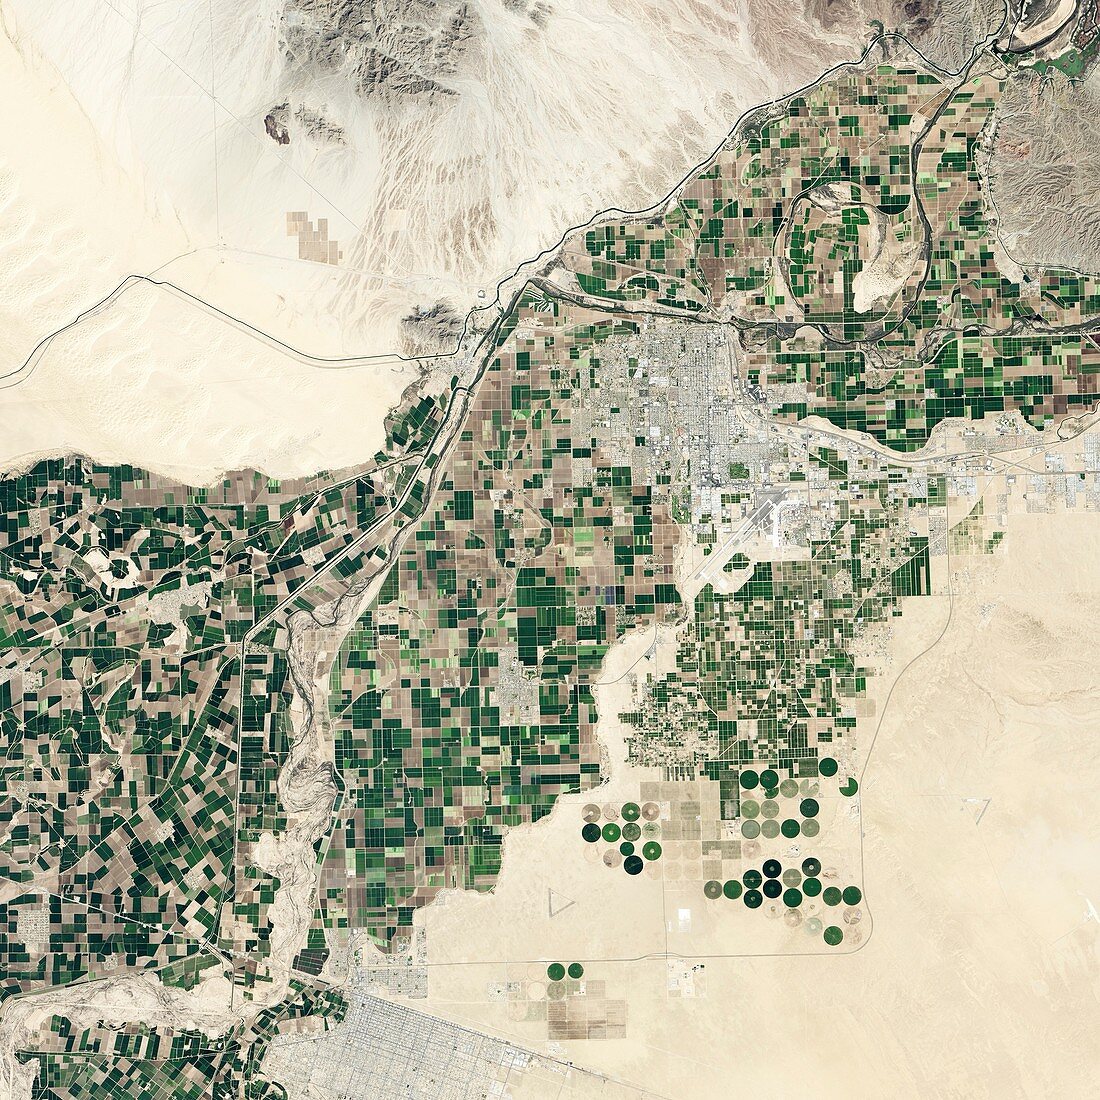 Lower Colorado River,Landsat 8 image